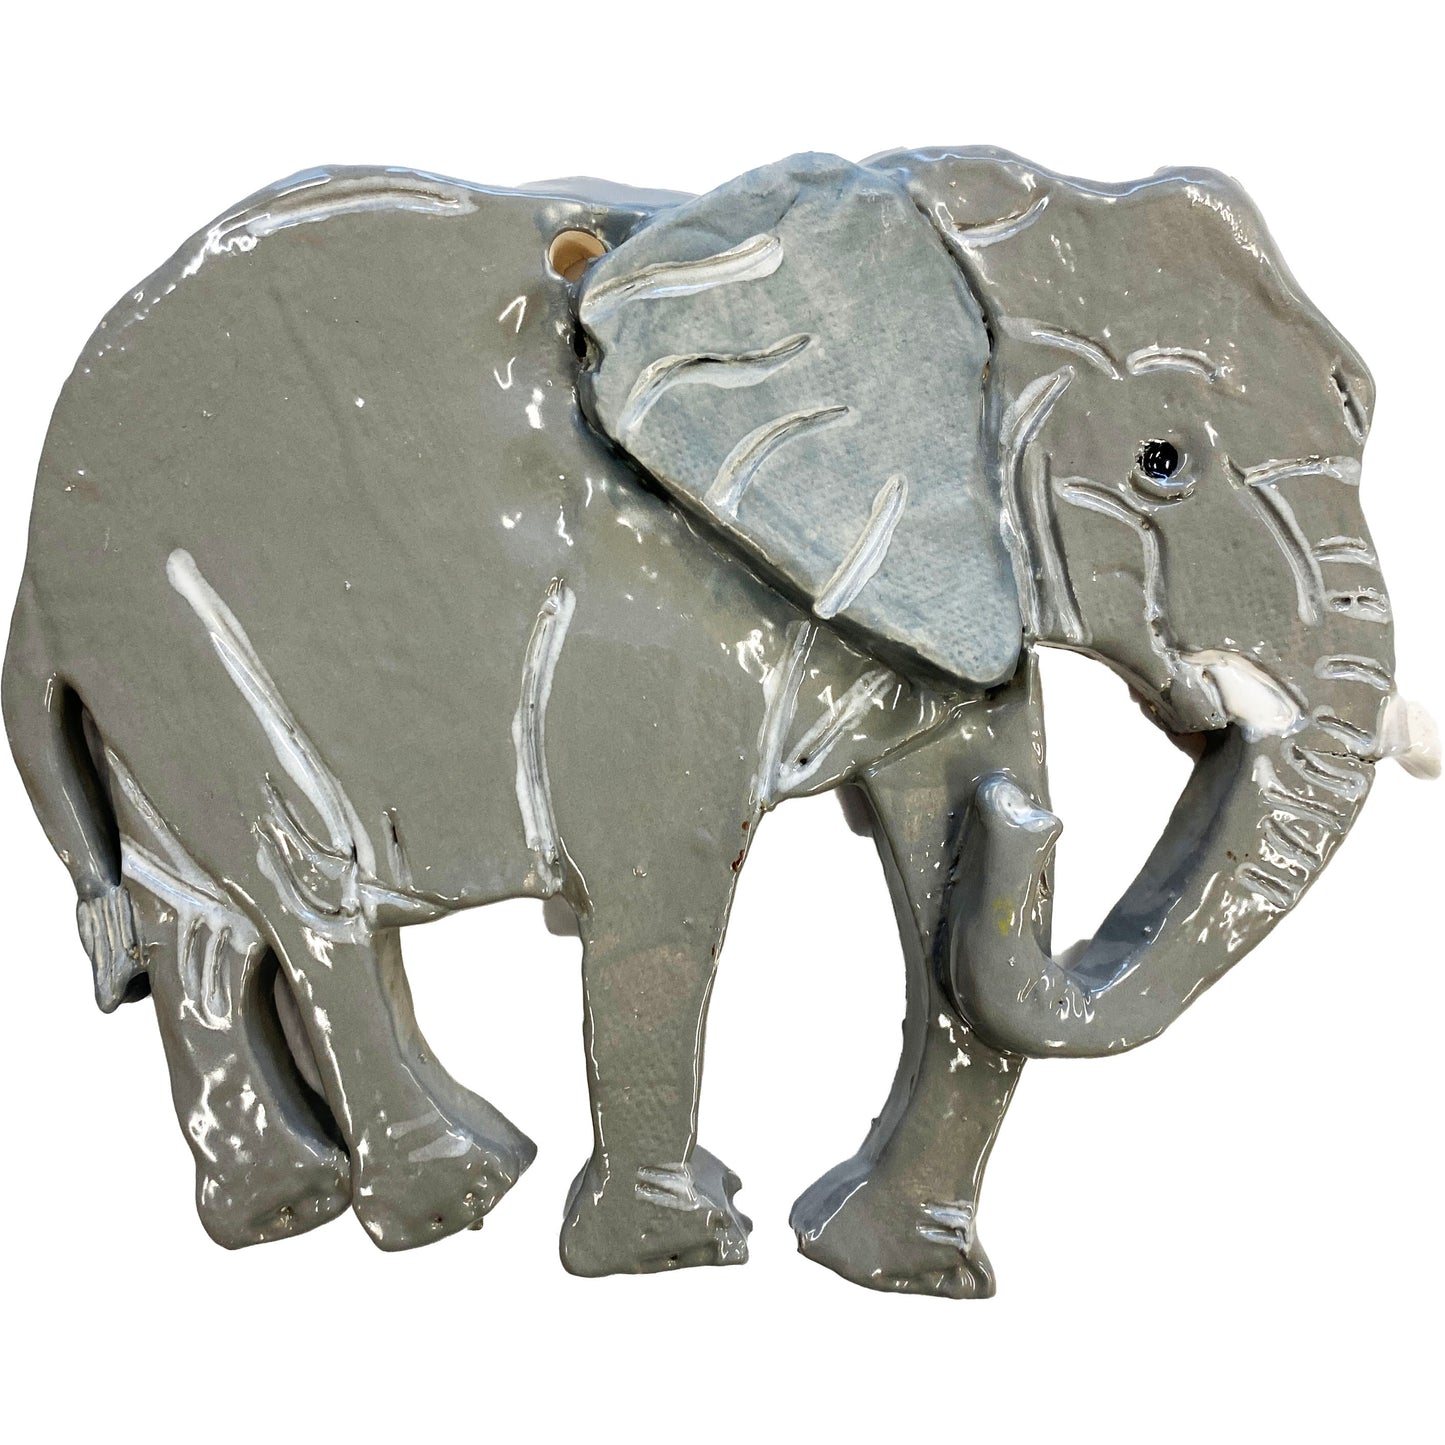 Ceramic Arts Handmade Clay Crafts Glazed 8-inch x 5-inch Elephant made by Lisa Uptain